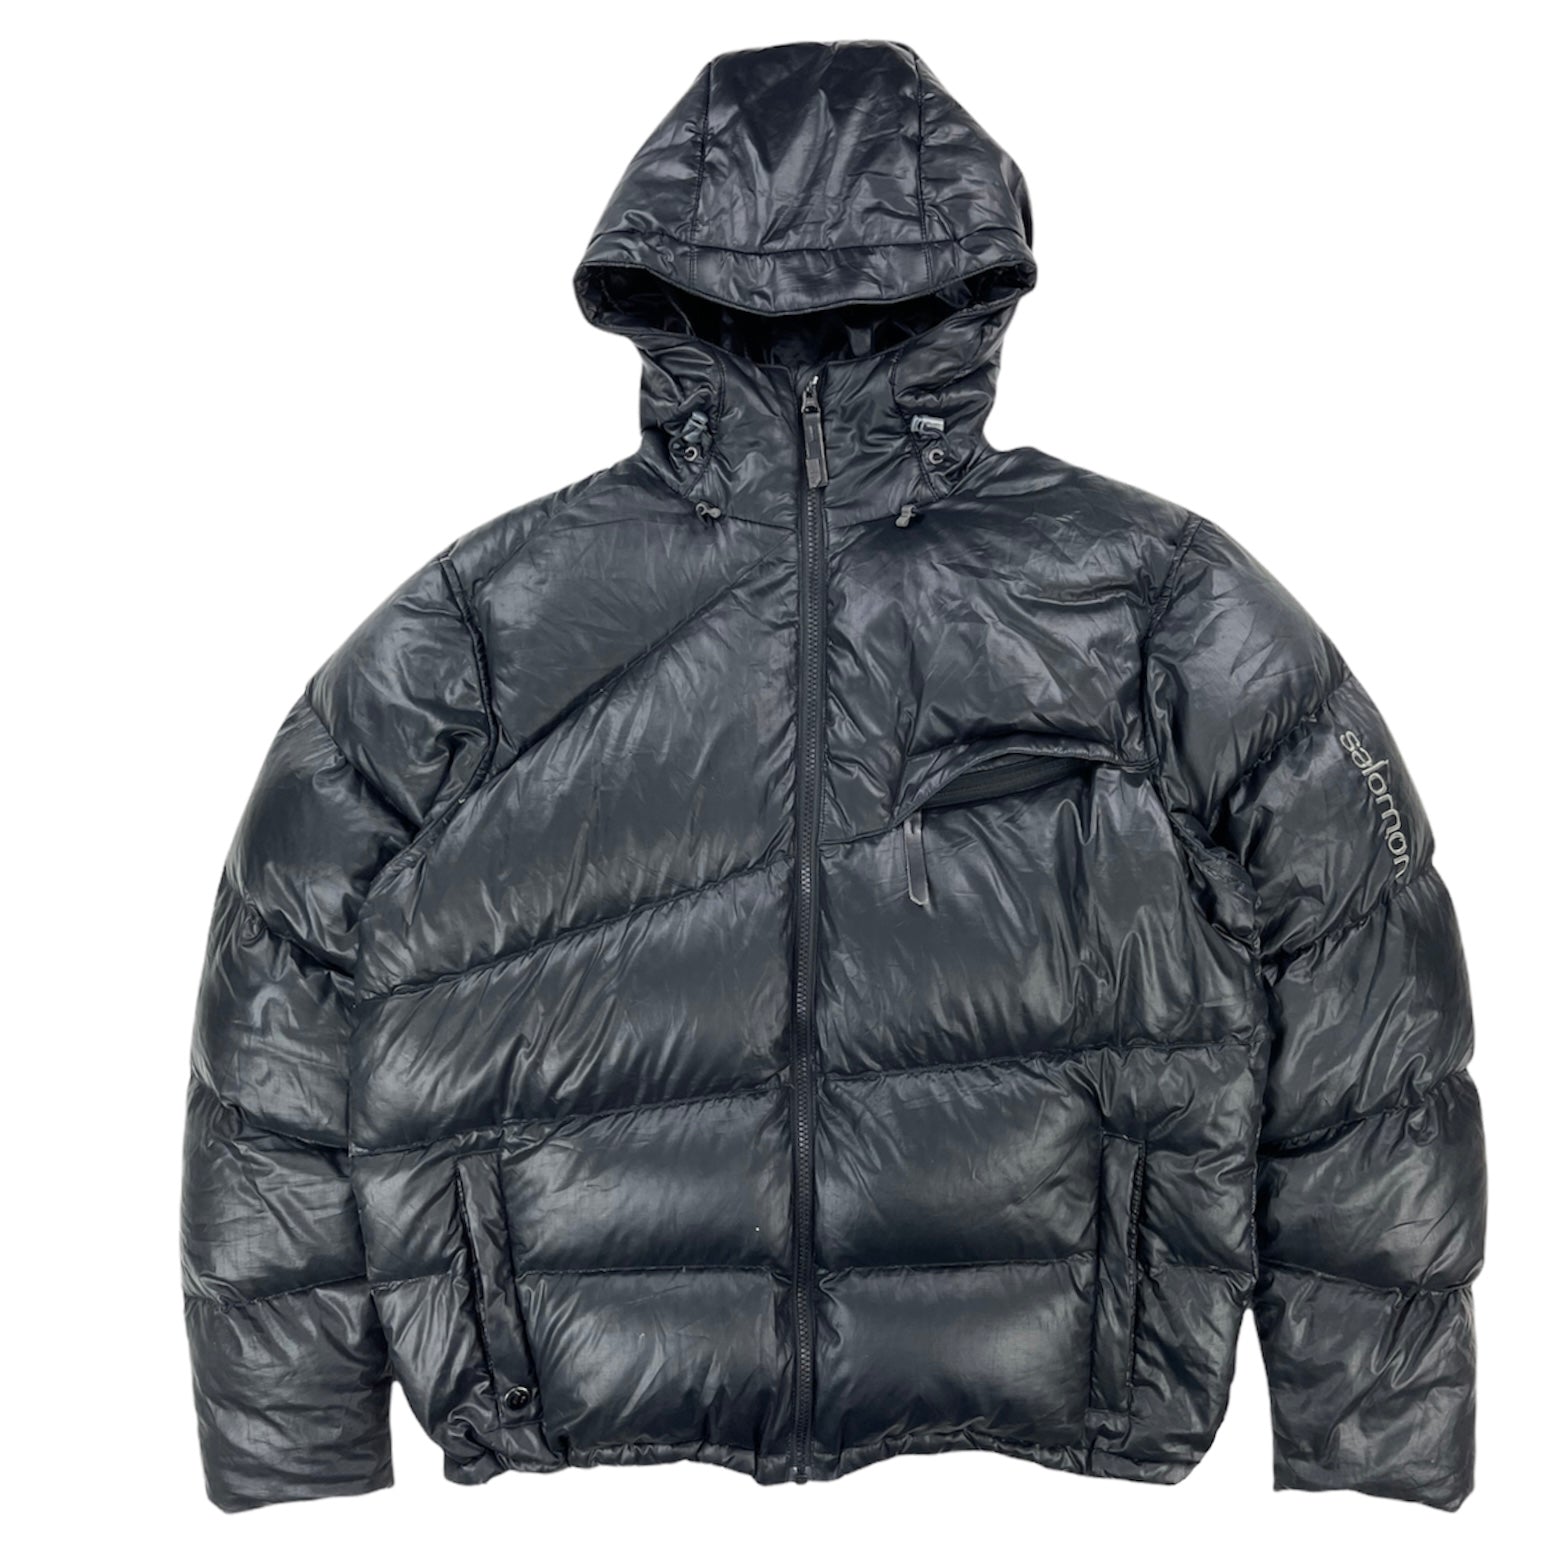 2000s Salomon puffer jacket – insidetag